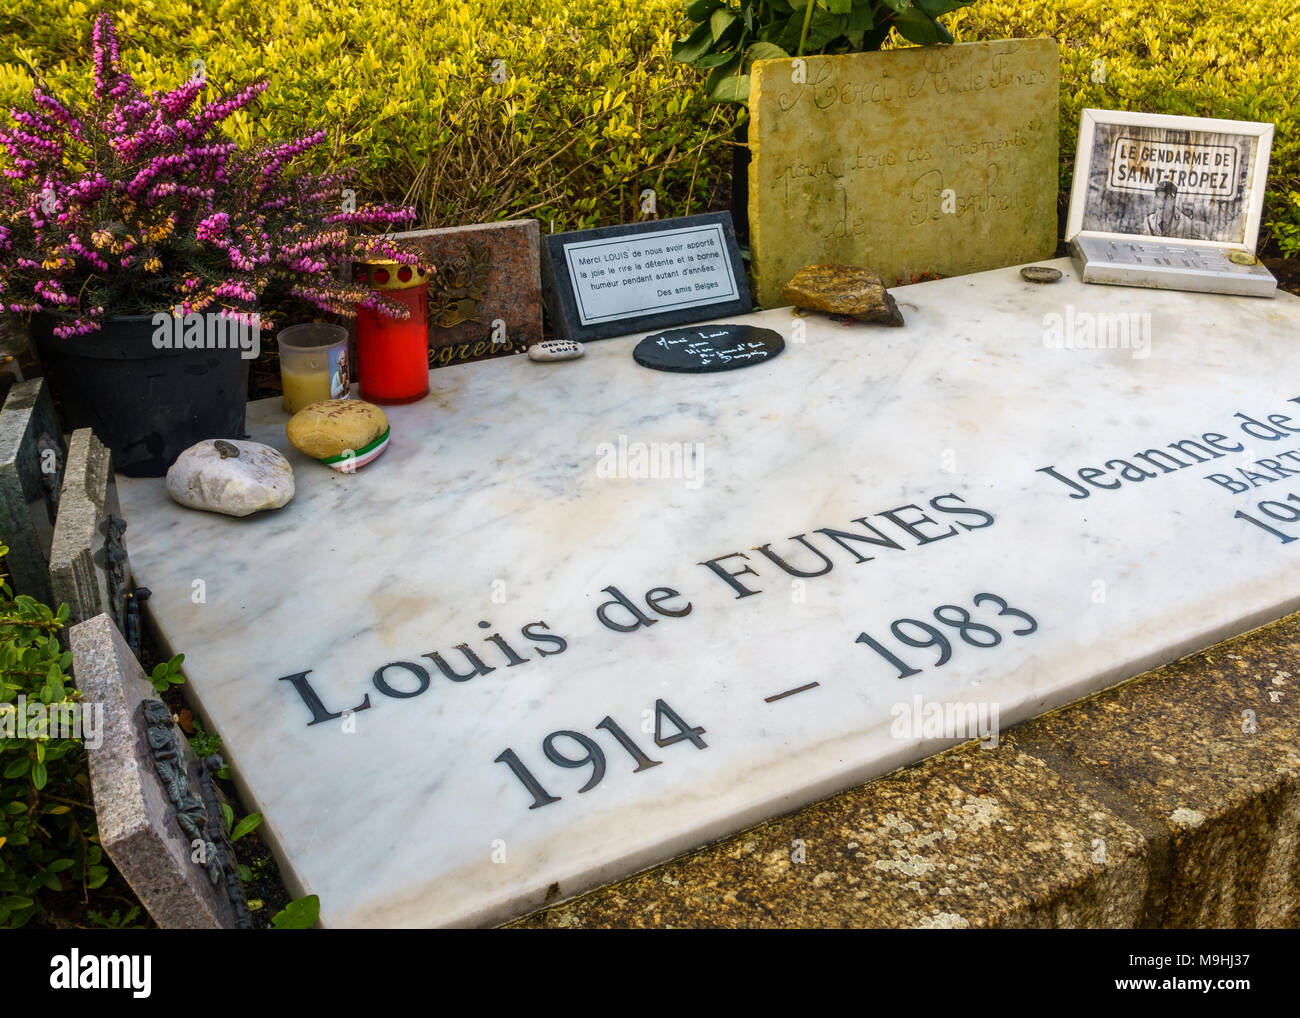 LE CELLIER, Francia - circa gennaio 2018: Louis de Funès tomba. Louis de Funès è stato un famoso attore francese. Foto Stock